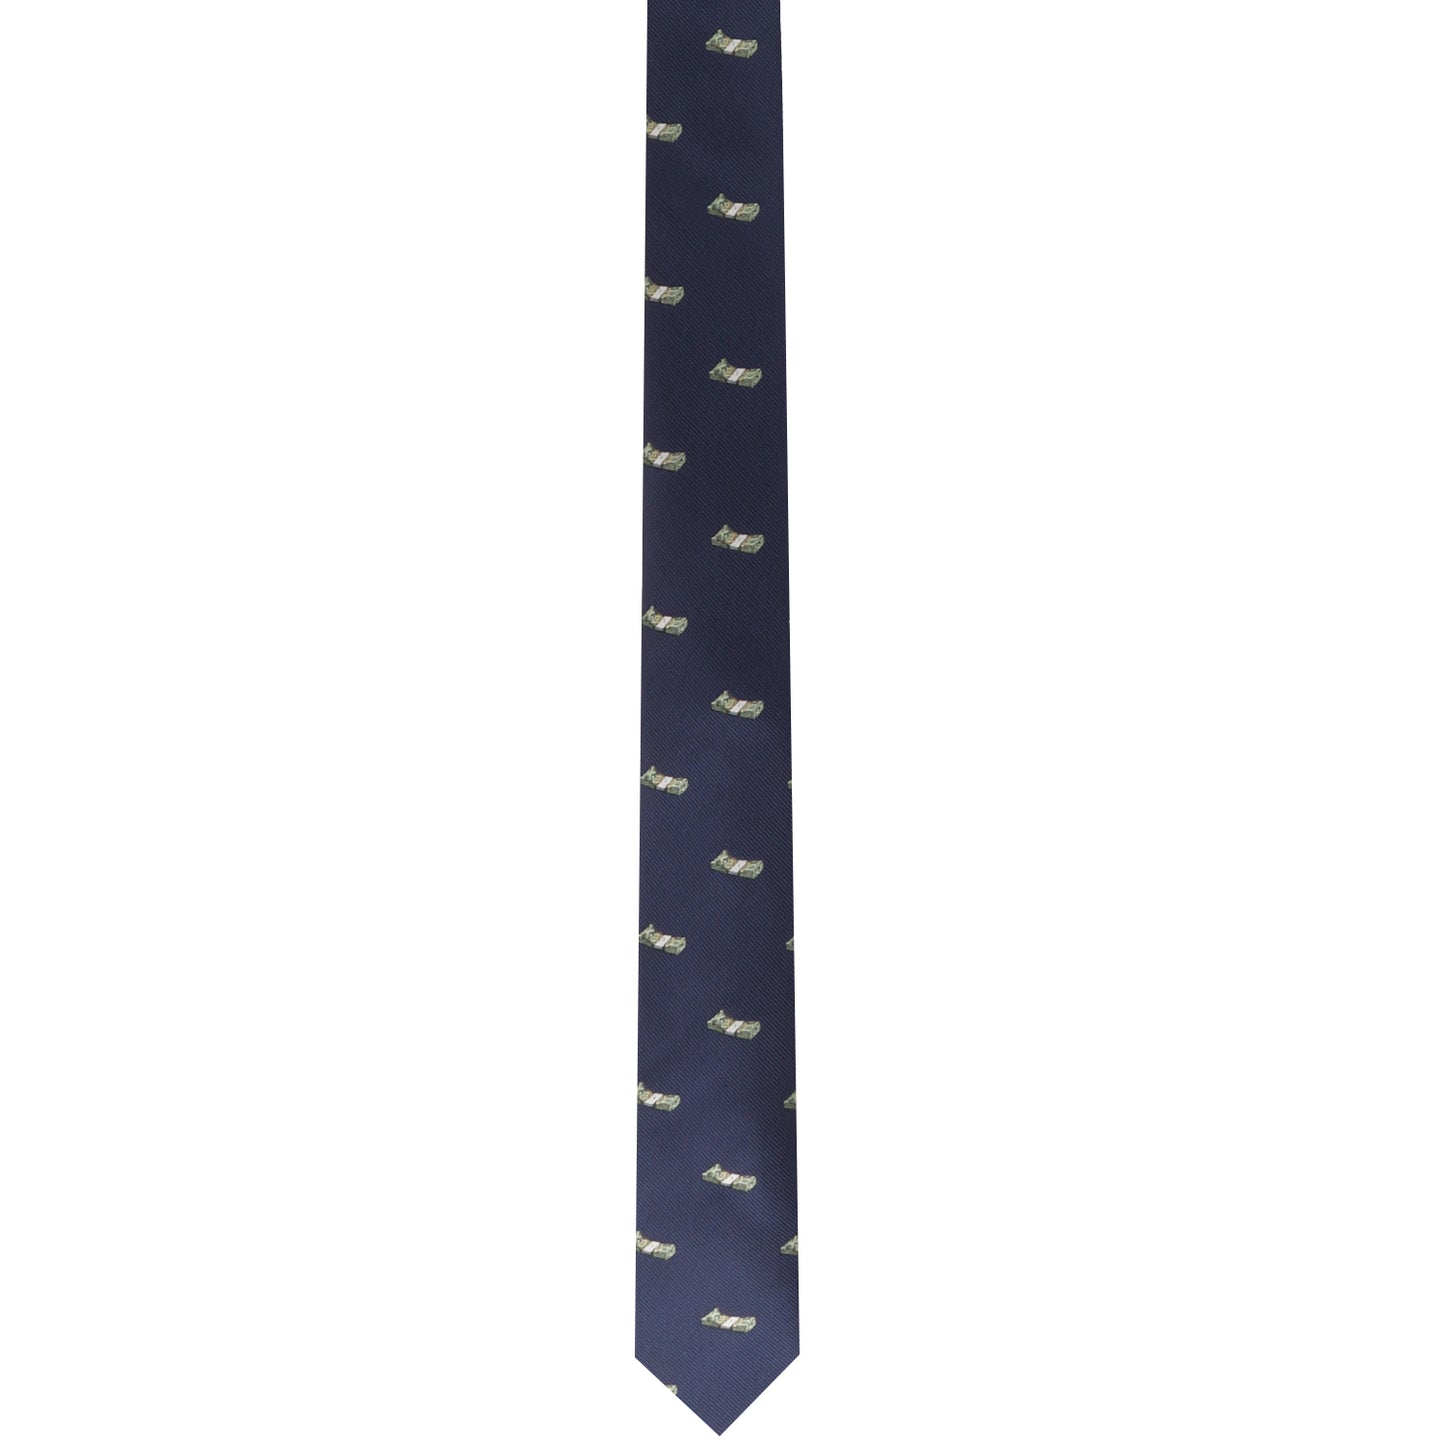 Cash Skinny Tie